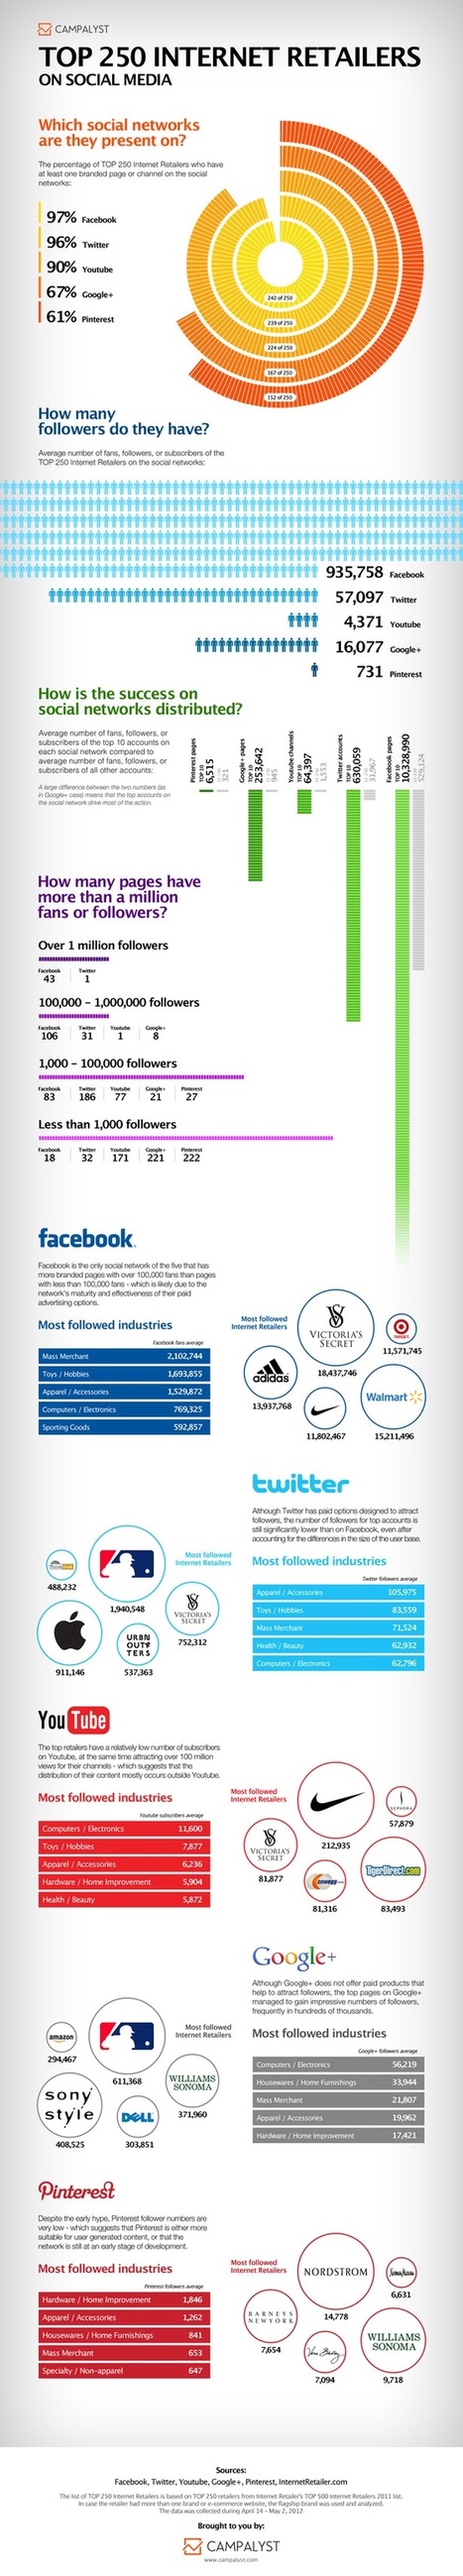 Top 250 Social Internet Retailers | Public Relations & Social Marketing Insight | Scoop.it